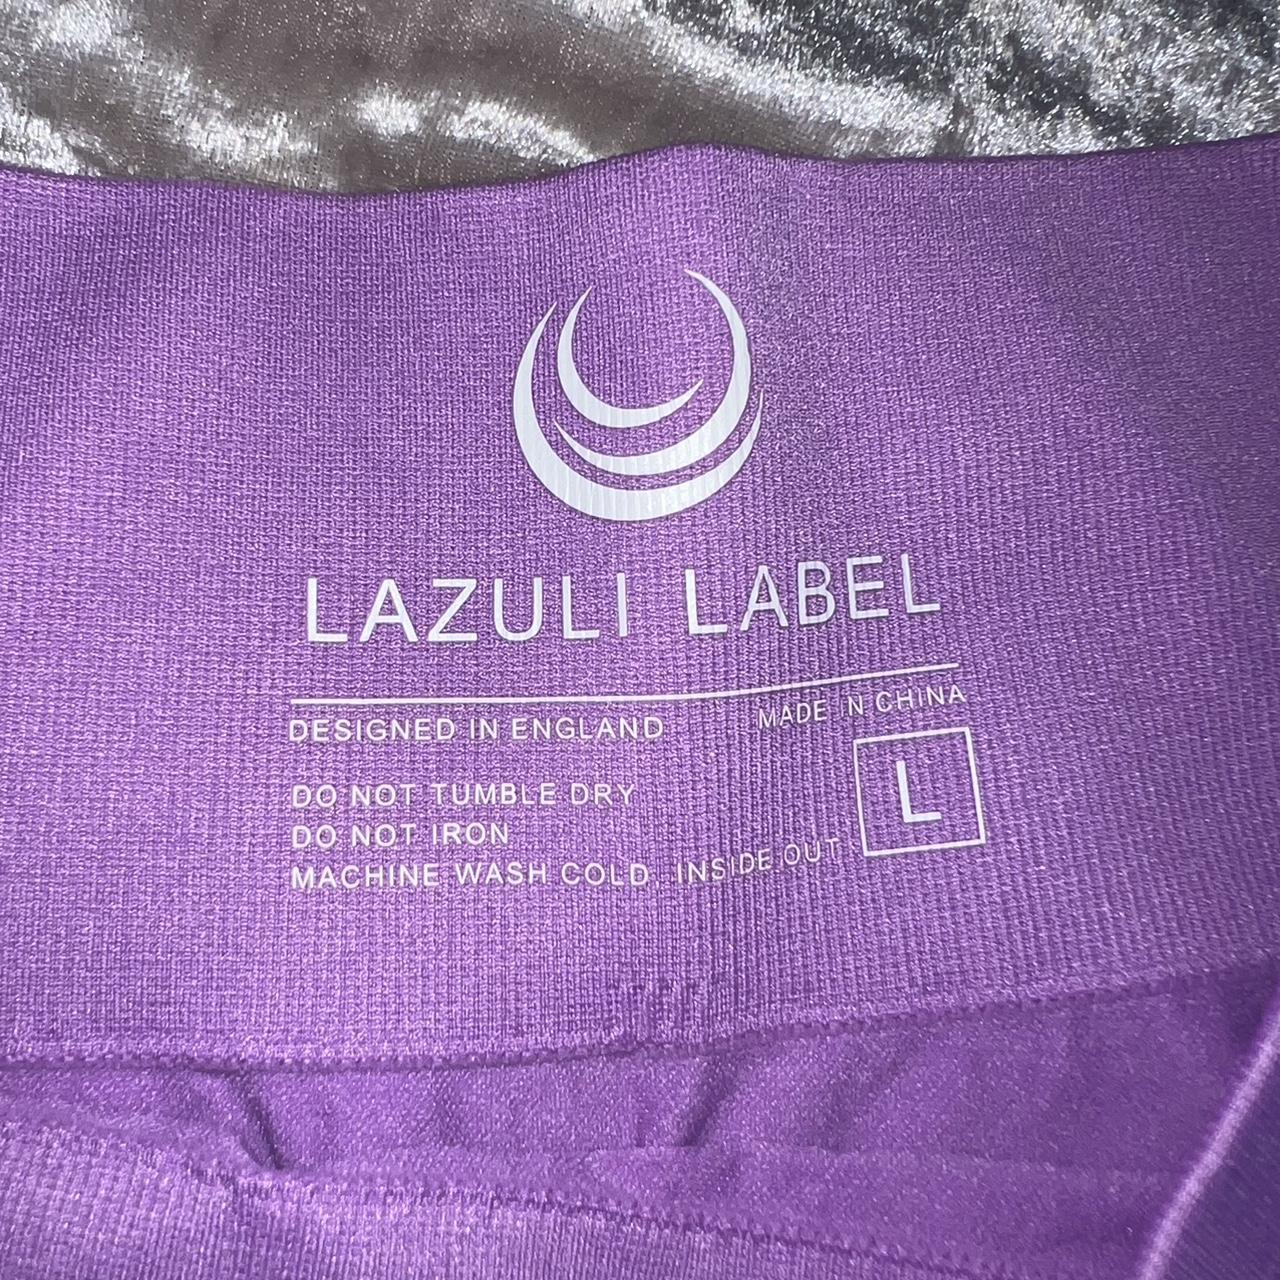 lazuli label leggings , never worn , size large